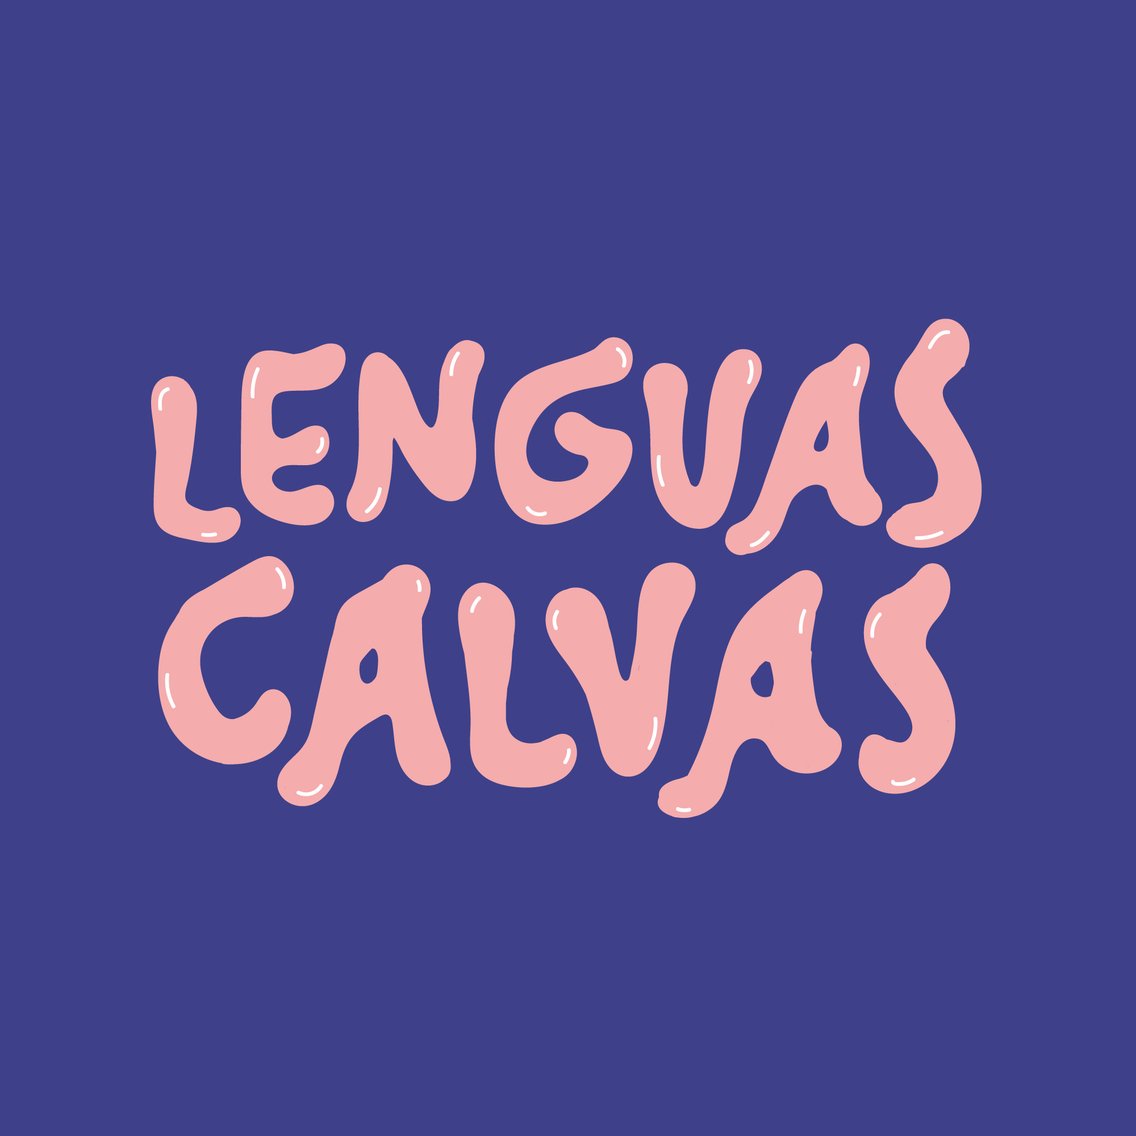 Lenguas Calvas - Cover Image